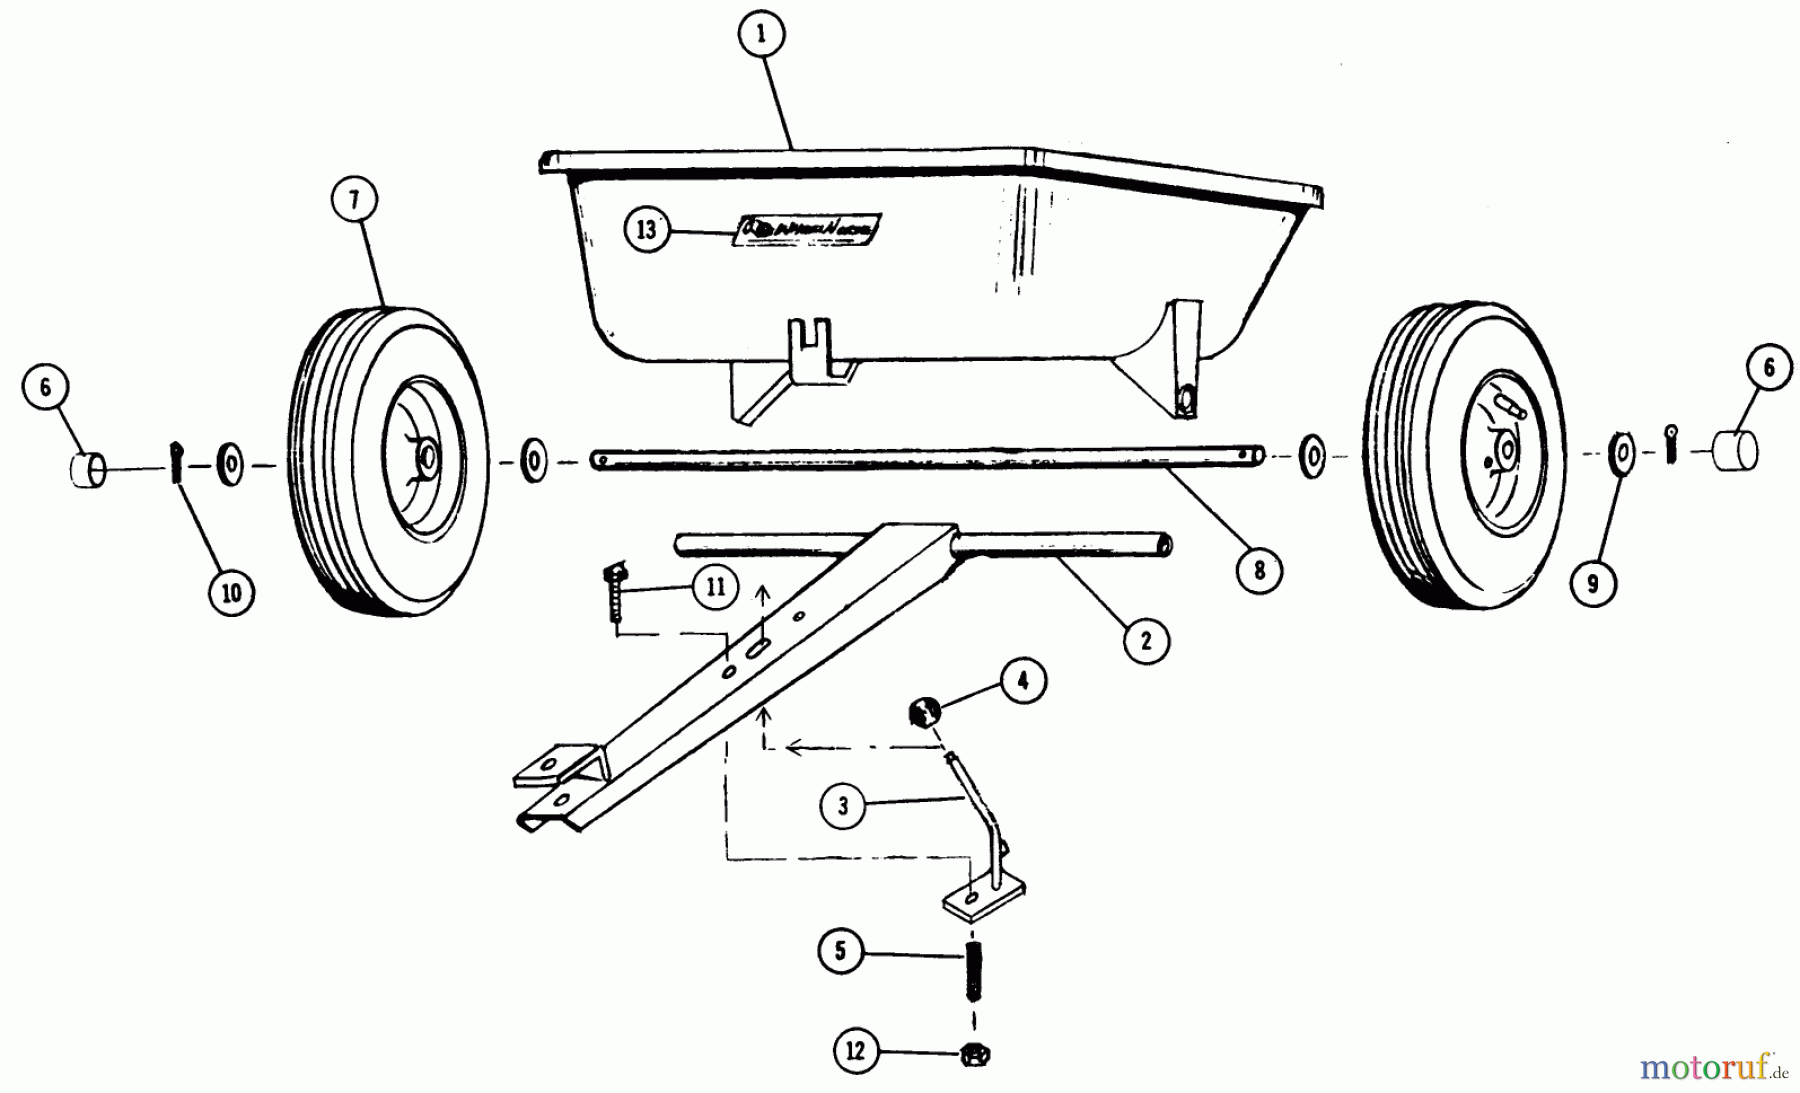  Toro Neu Utility Carts 7-2211 - Toro 2-Wheel Cart, 1969 PARTS LIST-DUMP TRAILER MODEL 7-2211 (FORMERLY LTD-244)